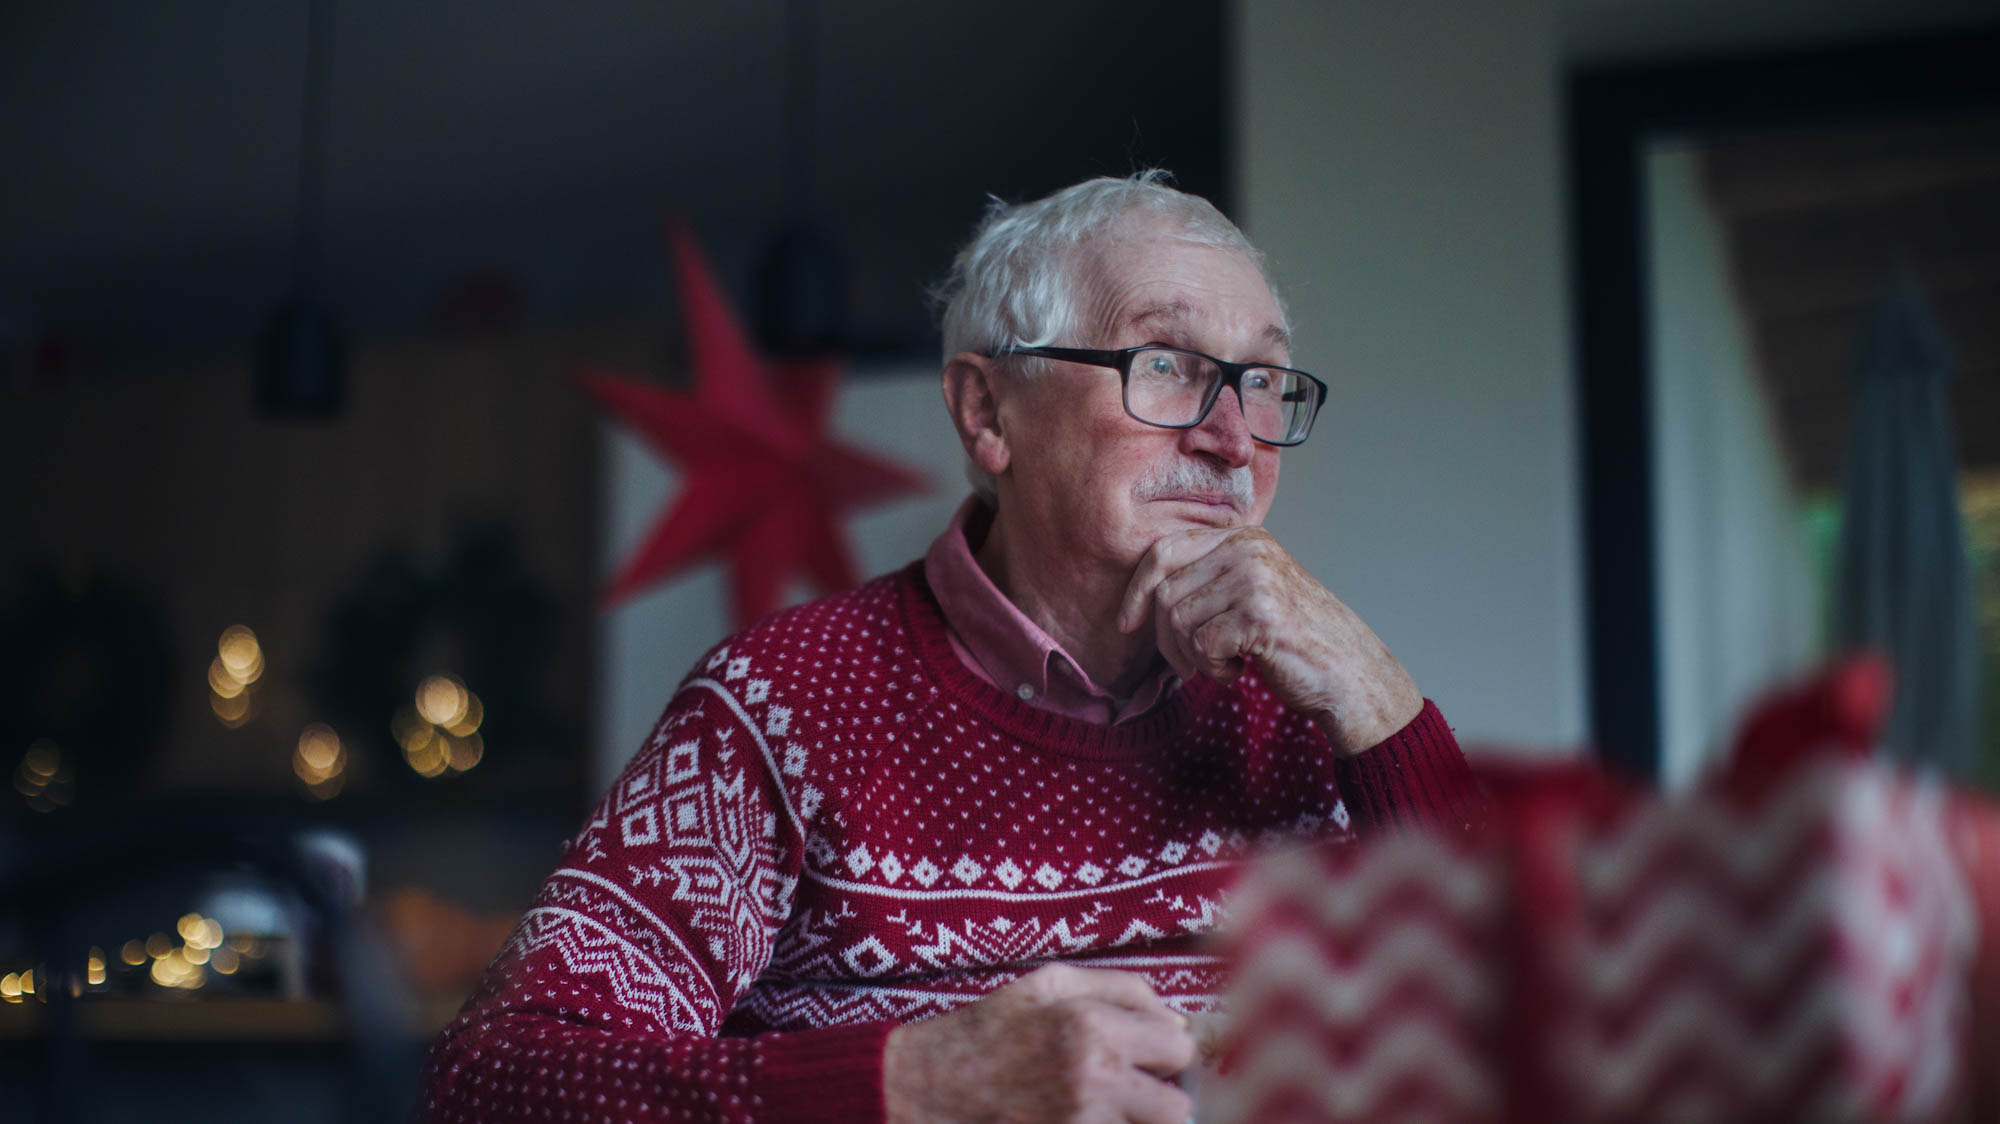 Old man in Christmas jumper looking sad